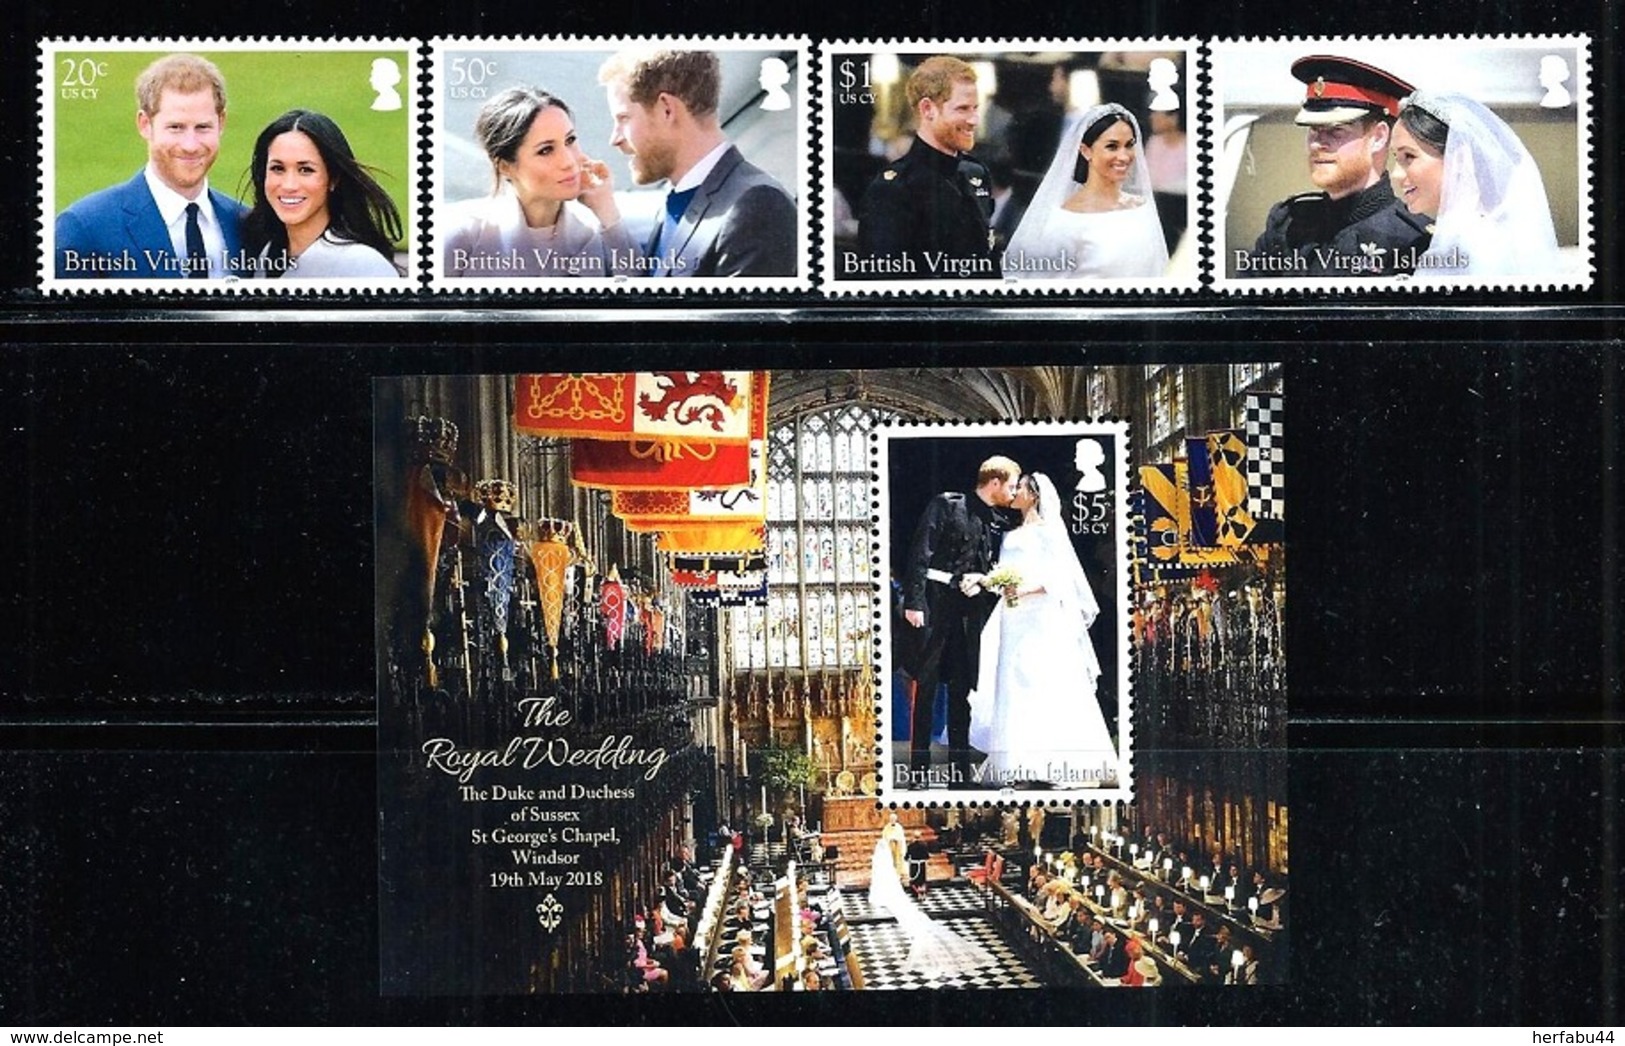 Virgin Islands   "Royal Wedding"    Set & Souvenir Sheet    New Issue   November-13-208   MNH - British Virgin Islands